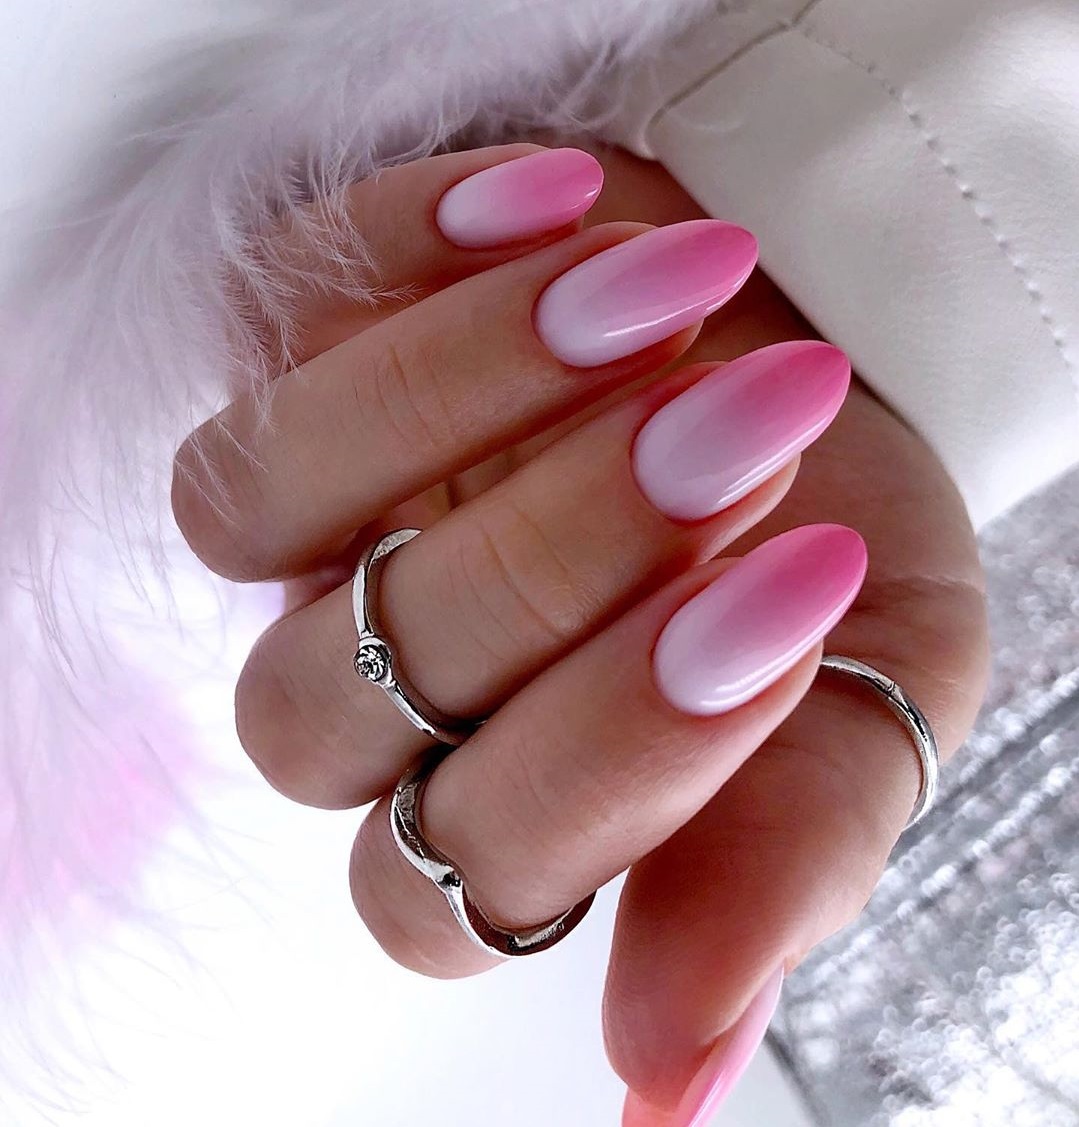 Маникюр розовый модные. Розовые ногти. Р̸о̸з̸о̸в̸ы̸й̸ м̸а̸н̸и̸к̸. Пошовый маникюр. Модные розовые ногти.